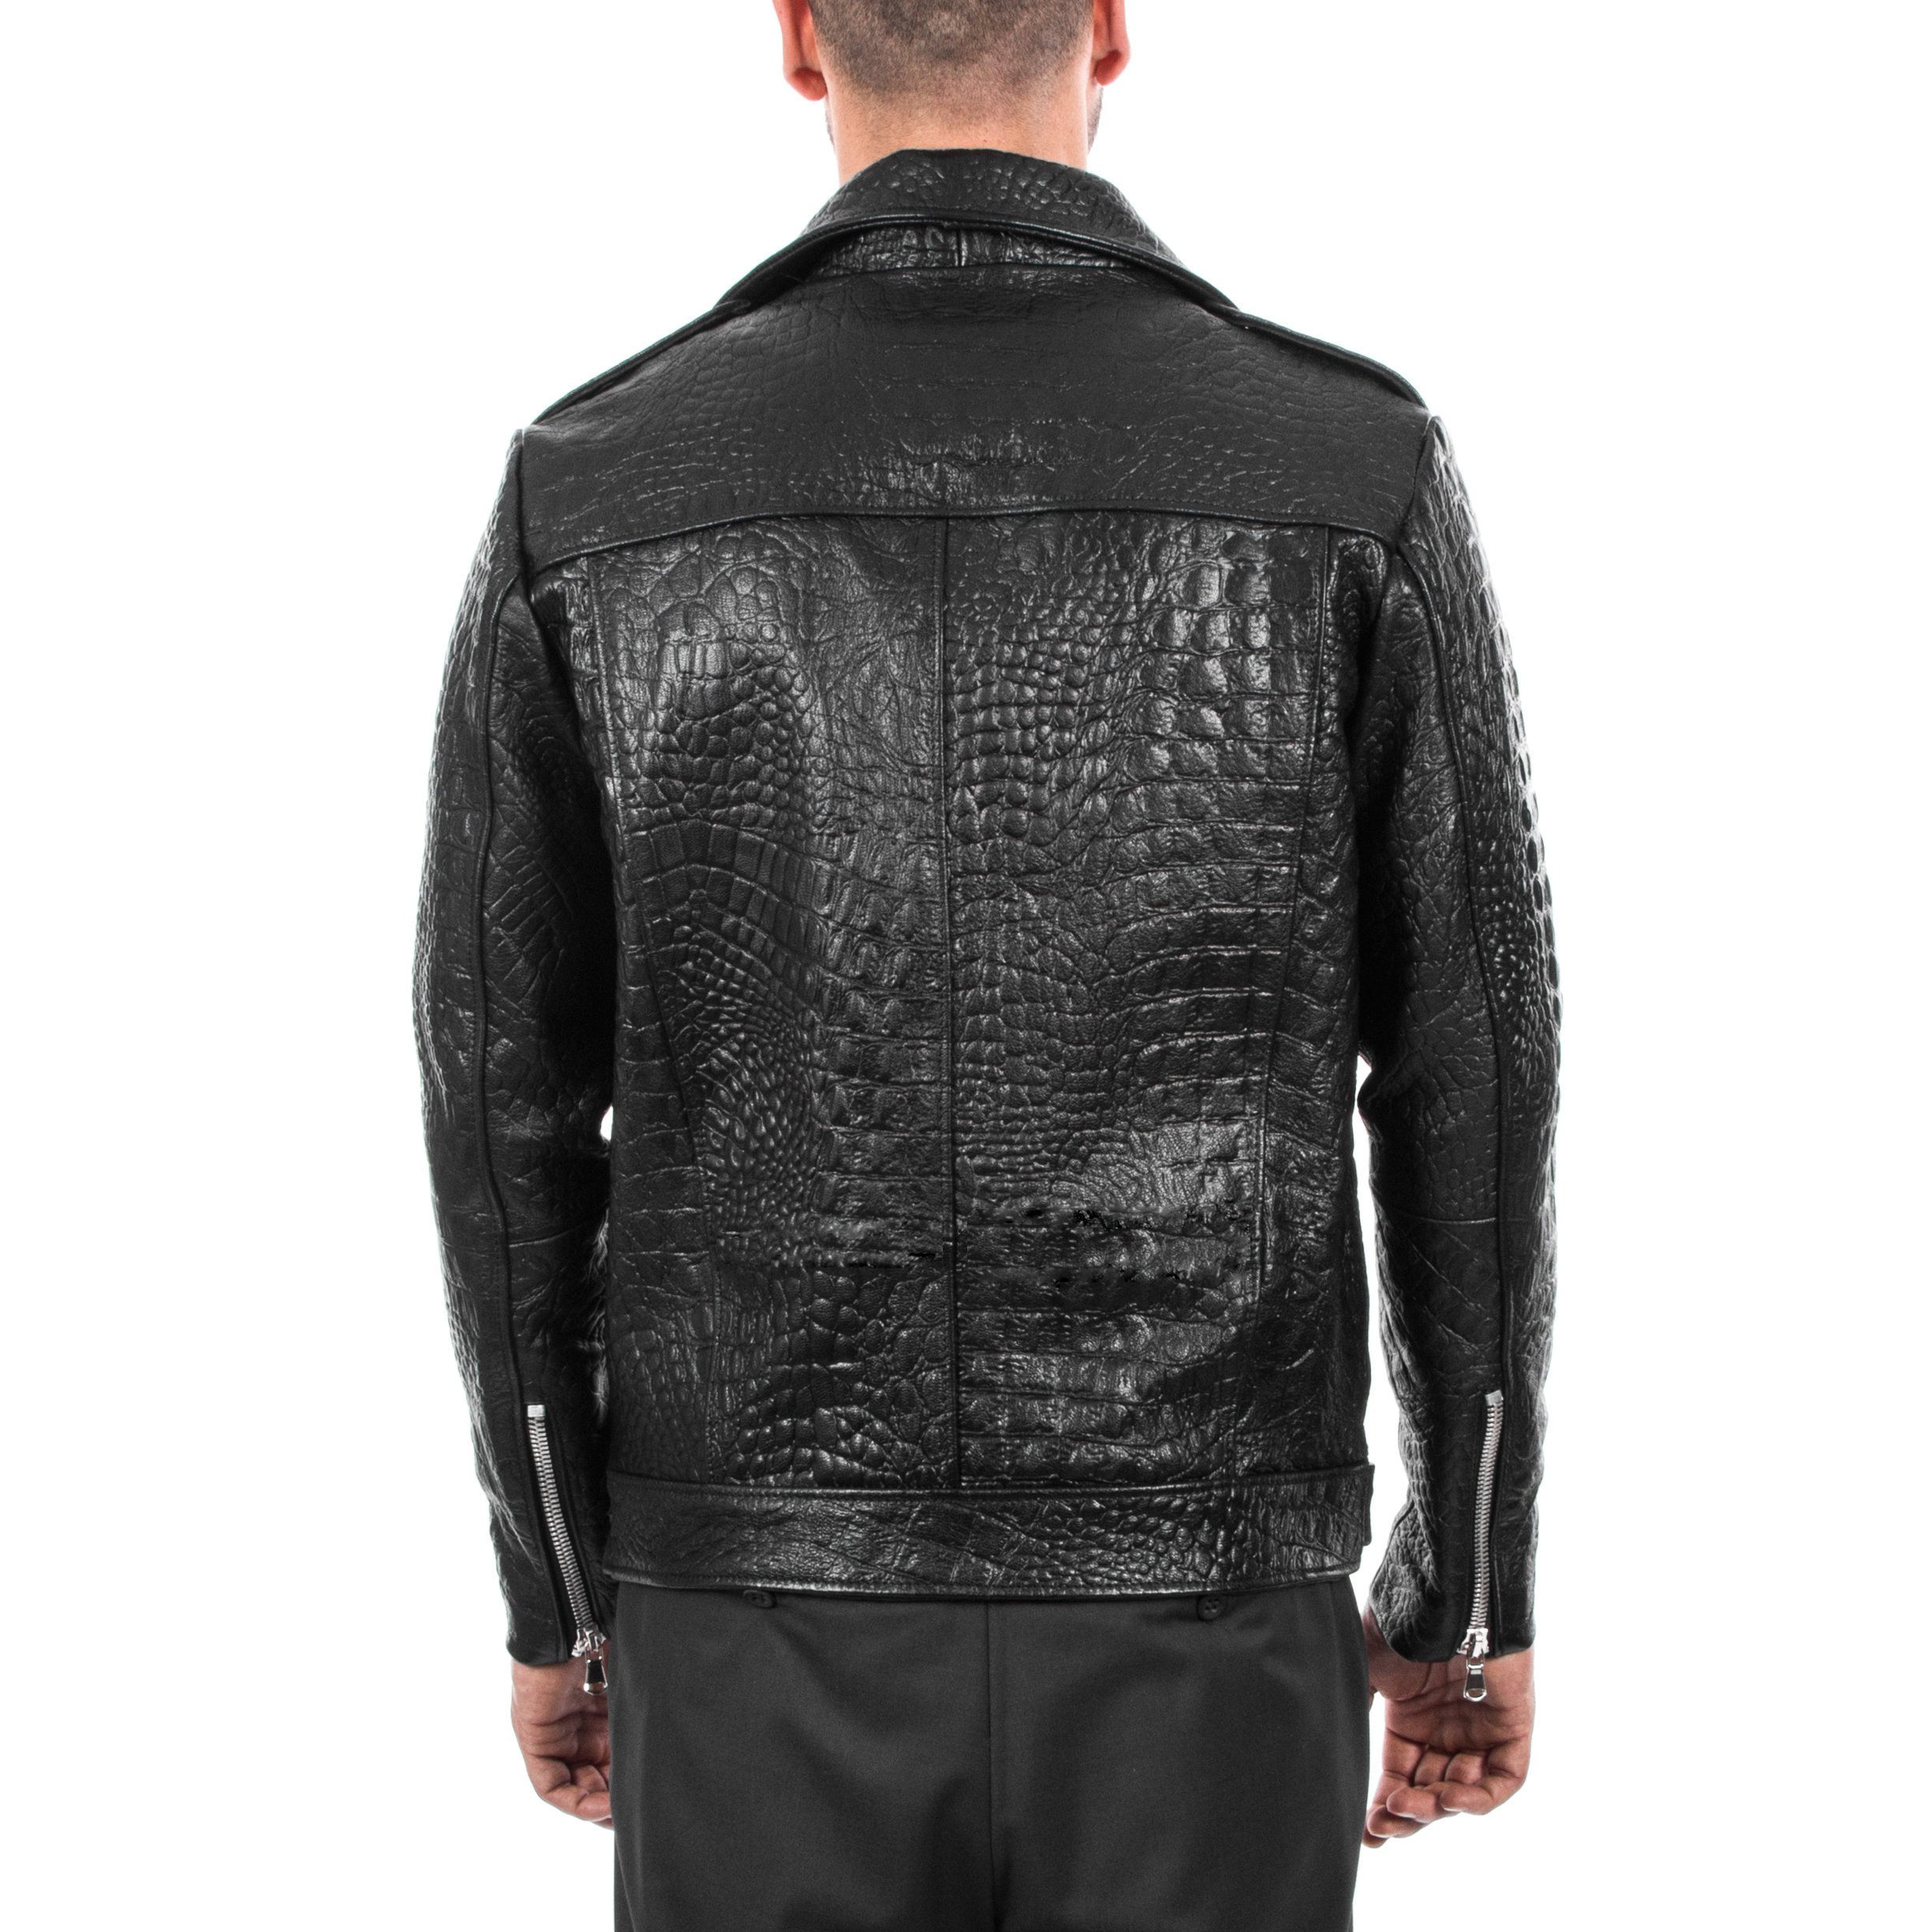 Jacket Makers Croc Alligator Motorcycle Leather Jacket